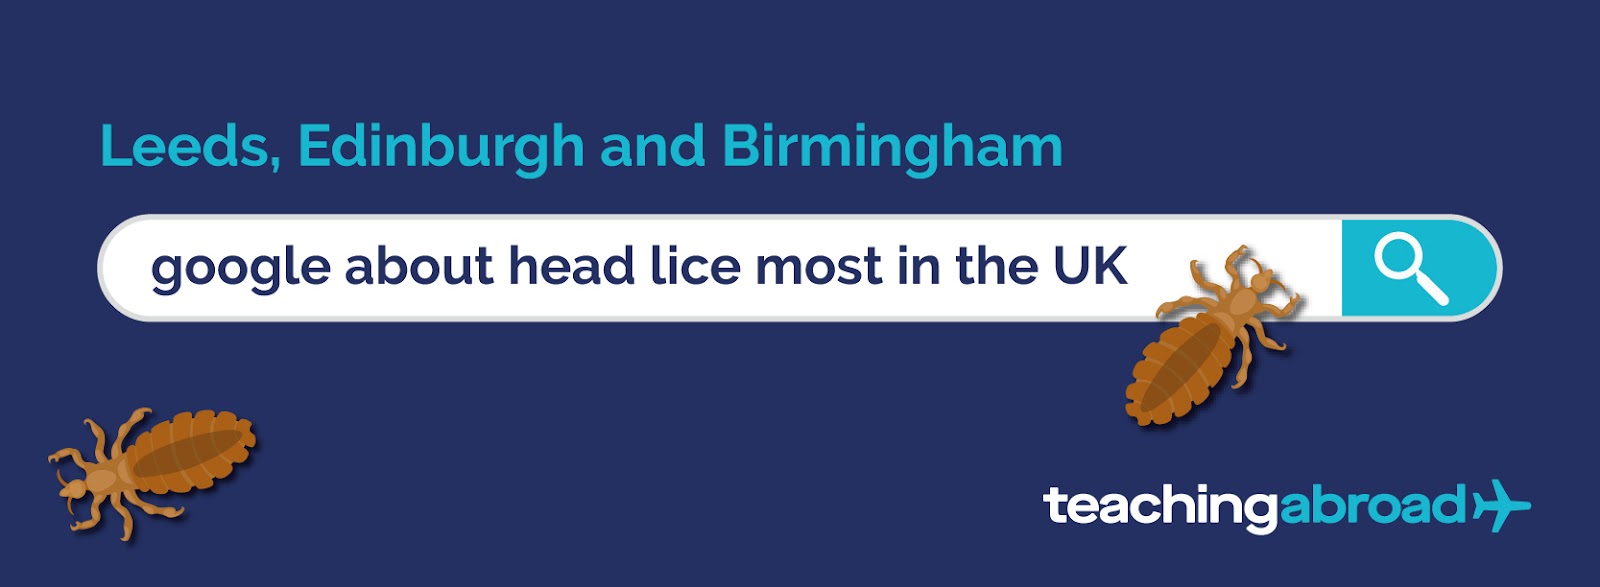 Leeds, Edinburgh and Birmingham google about head lice more than anyone else